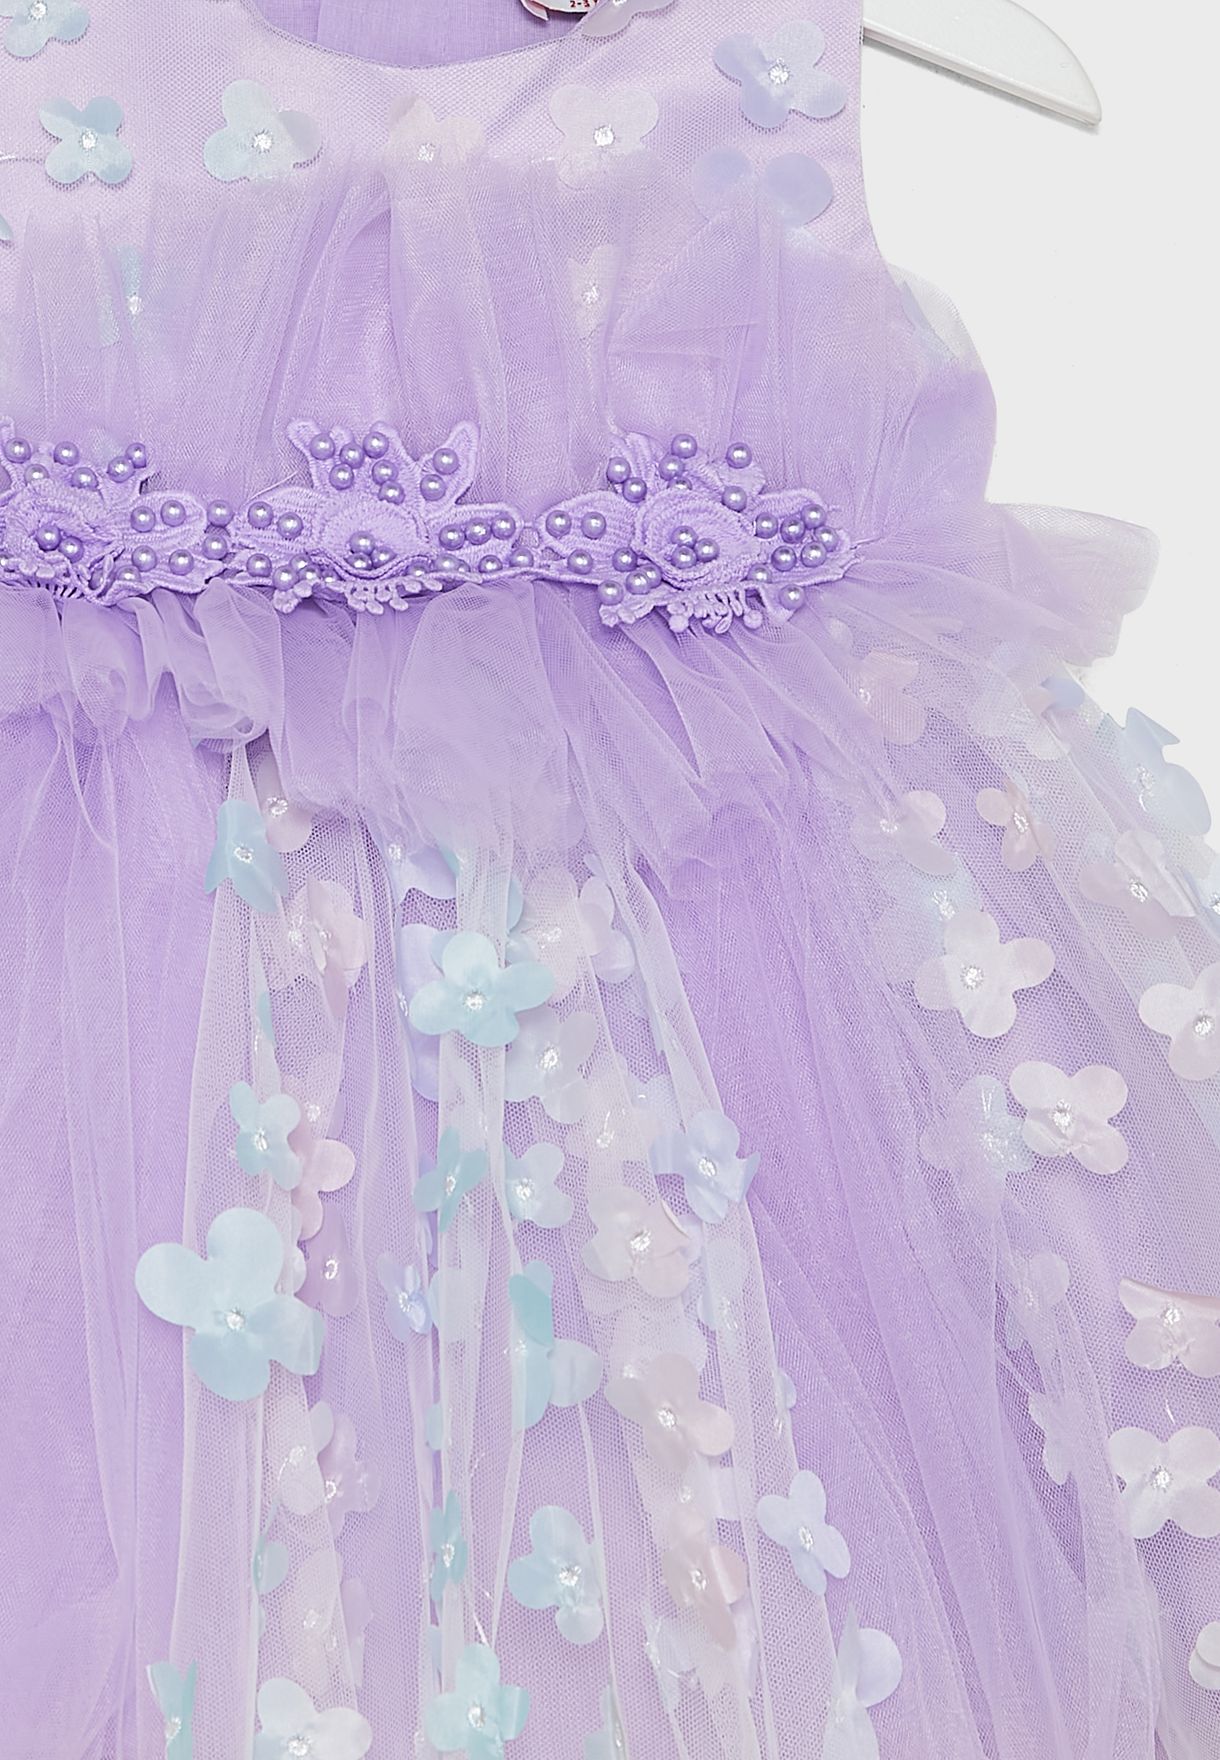 Girls Evening Wear Ruffled Dress With 3D Flowers All Over